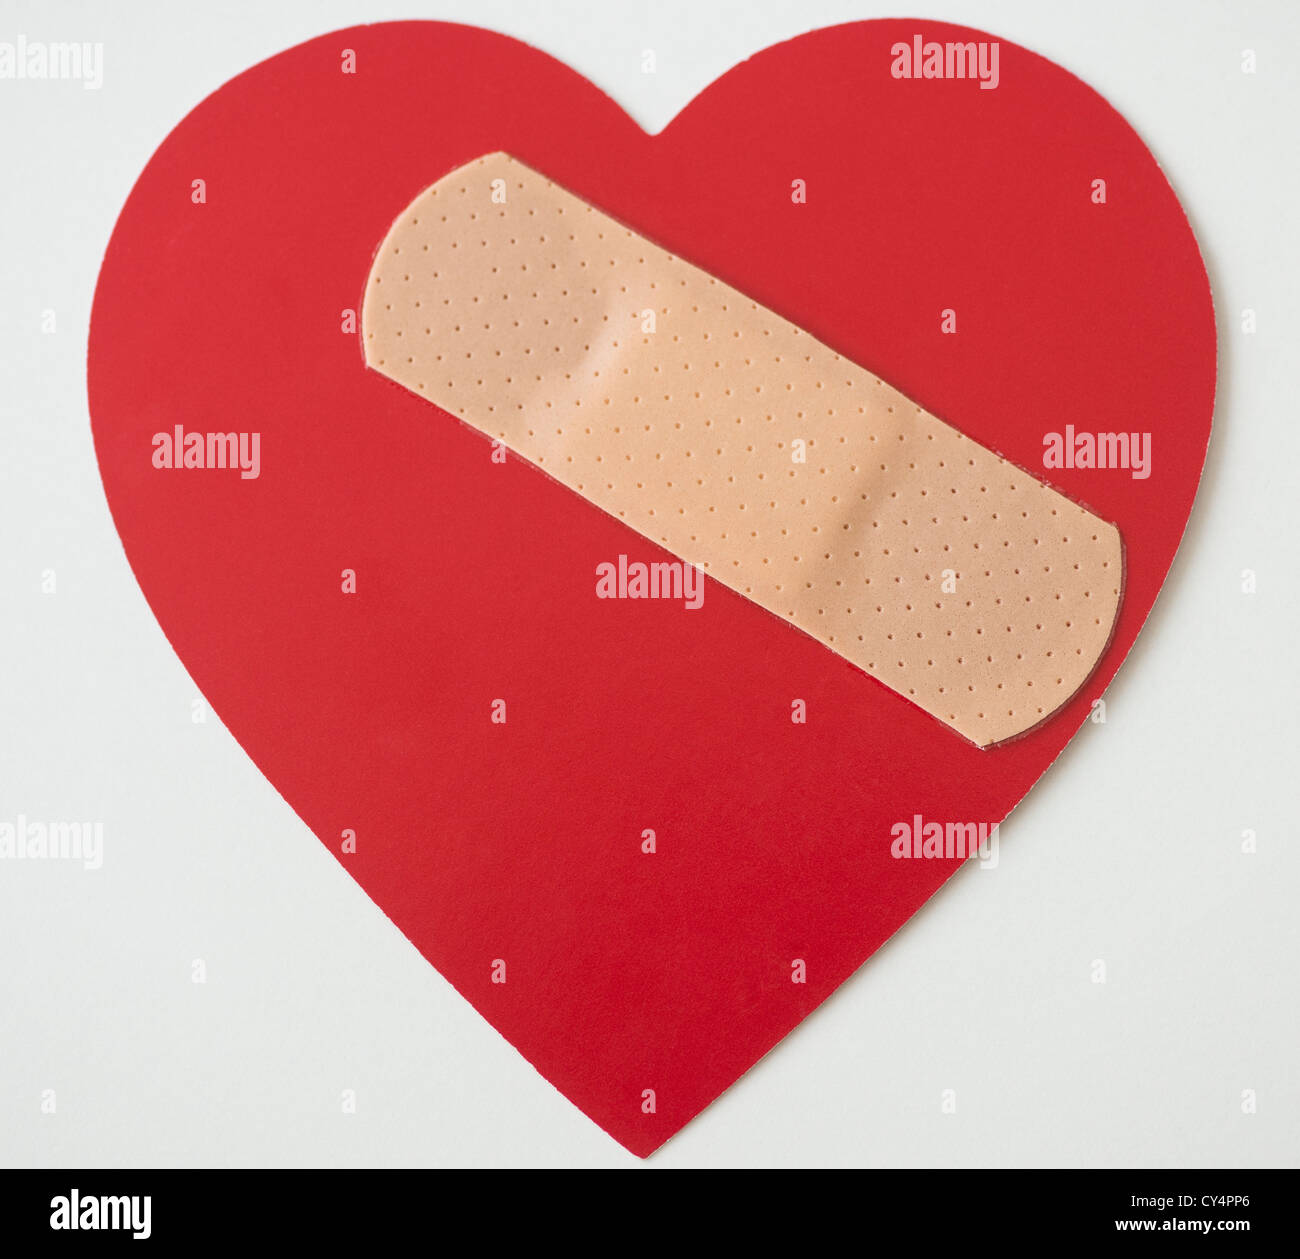 Studio shot of heart with adhesive bandage Stock Photo